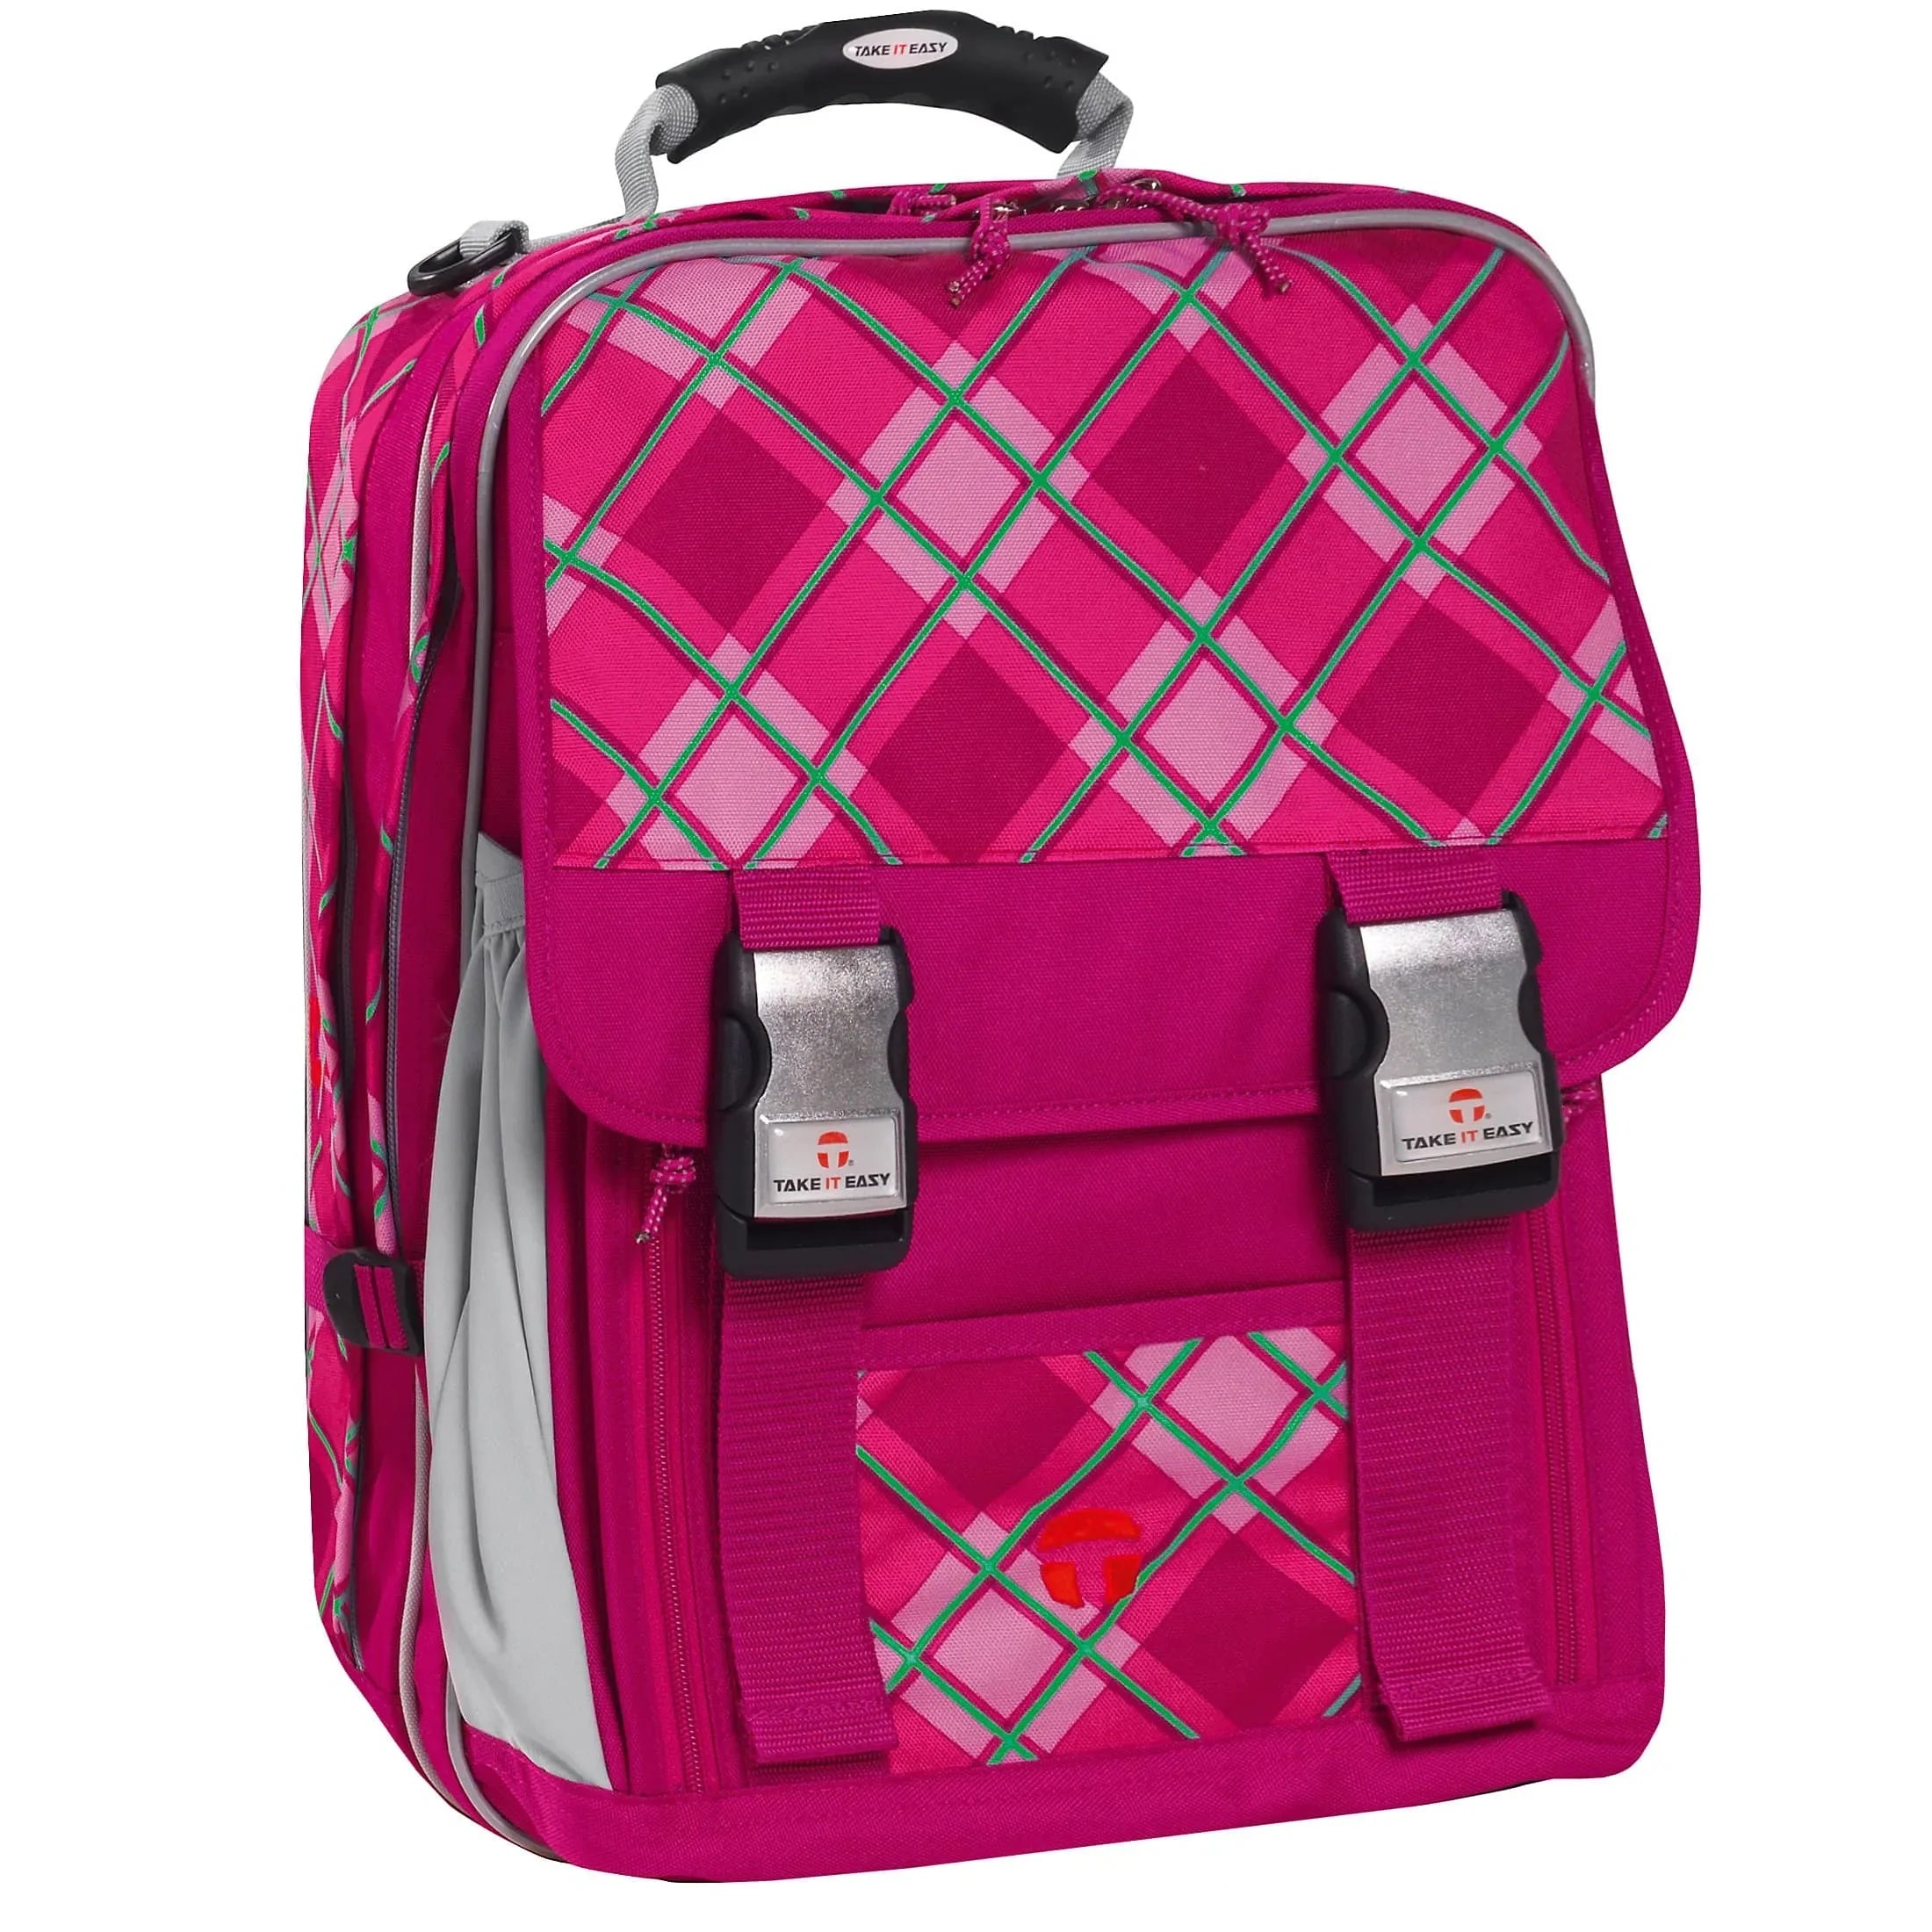 Take it Easy Actionbags sac à dos scolaire London 40 cm - rose fantaisie